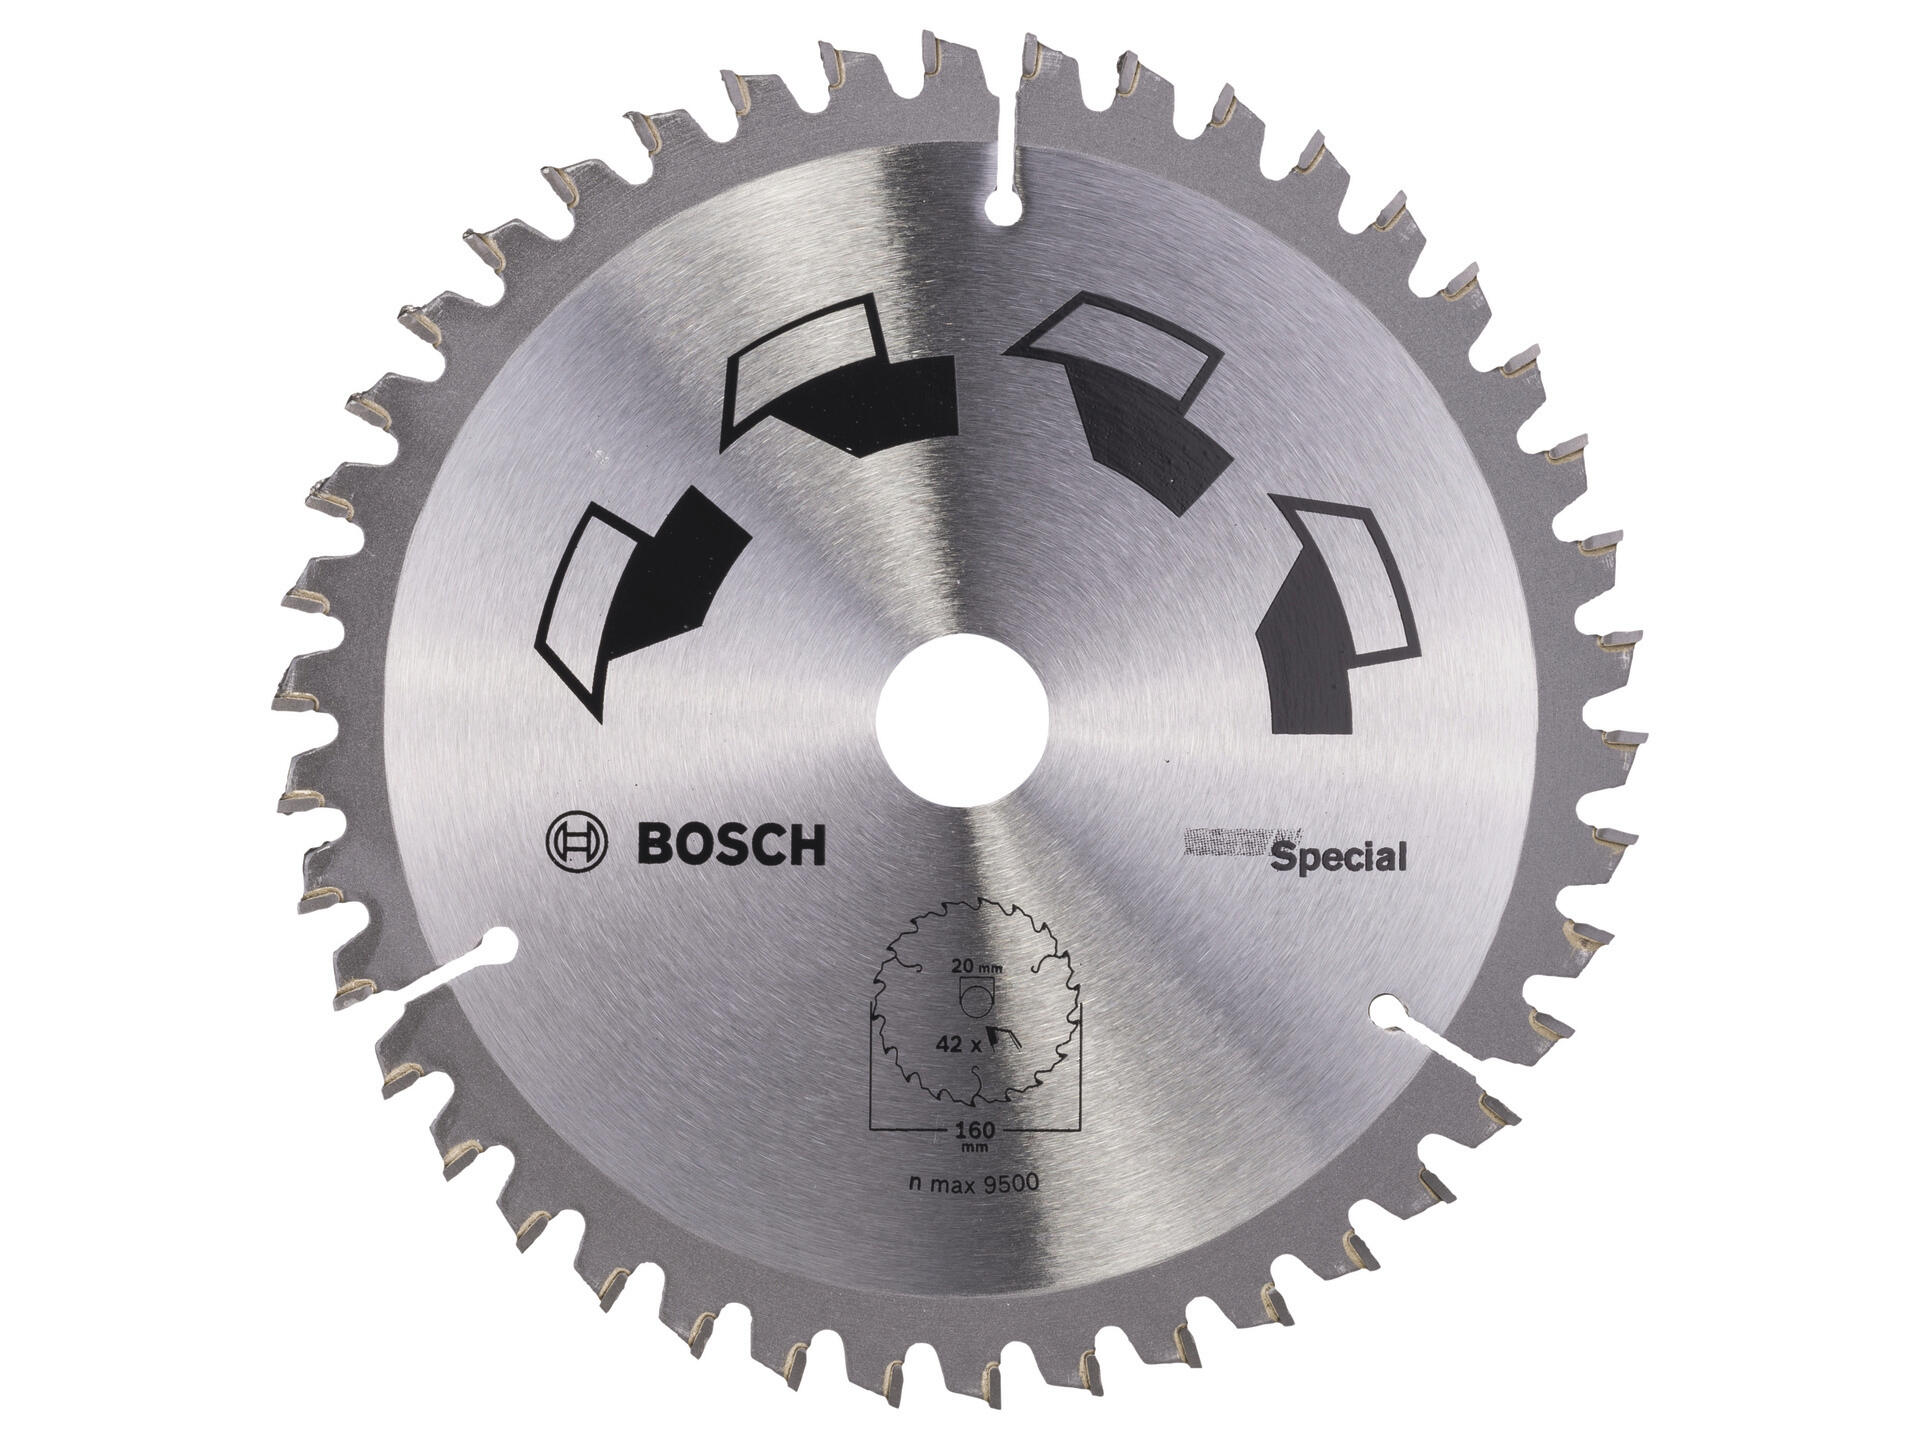 Bosch Special 160mm hout | Hubo